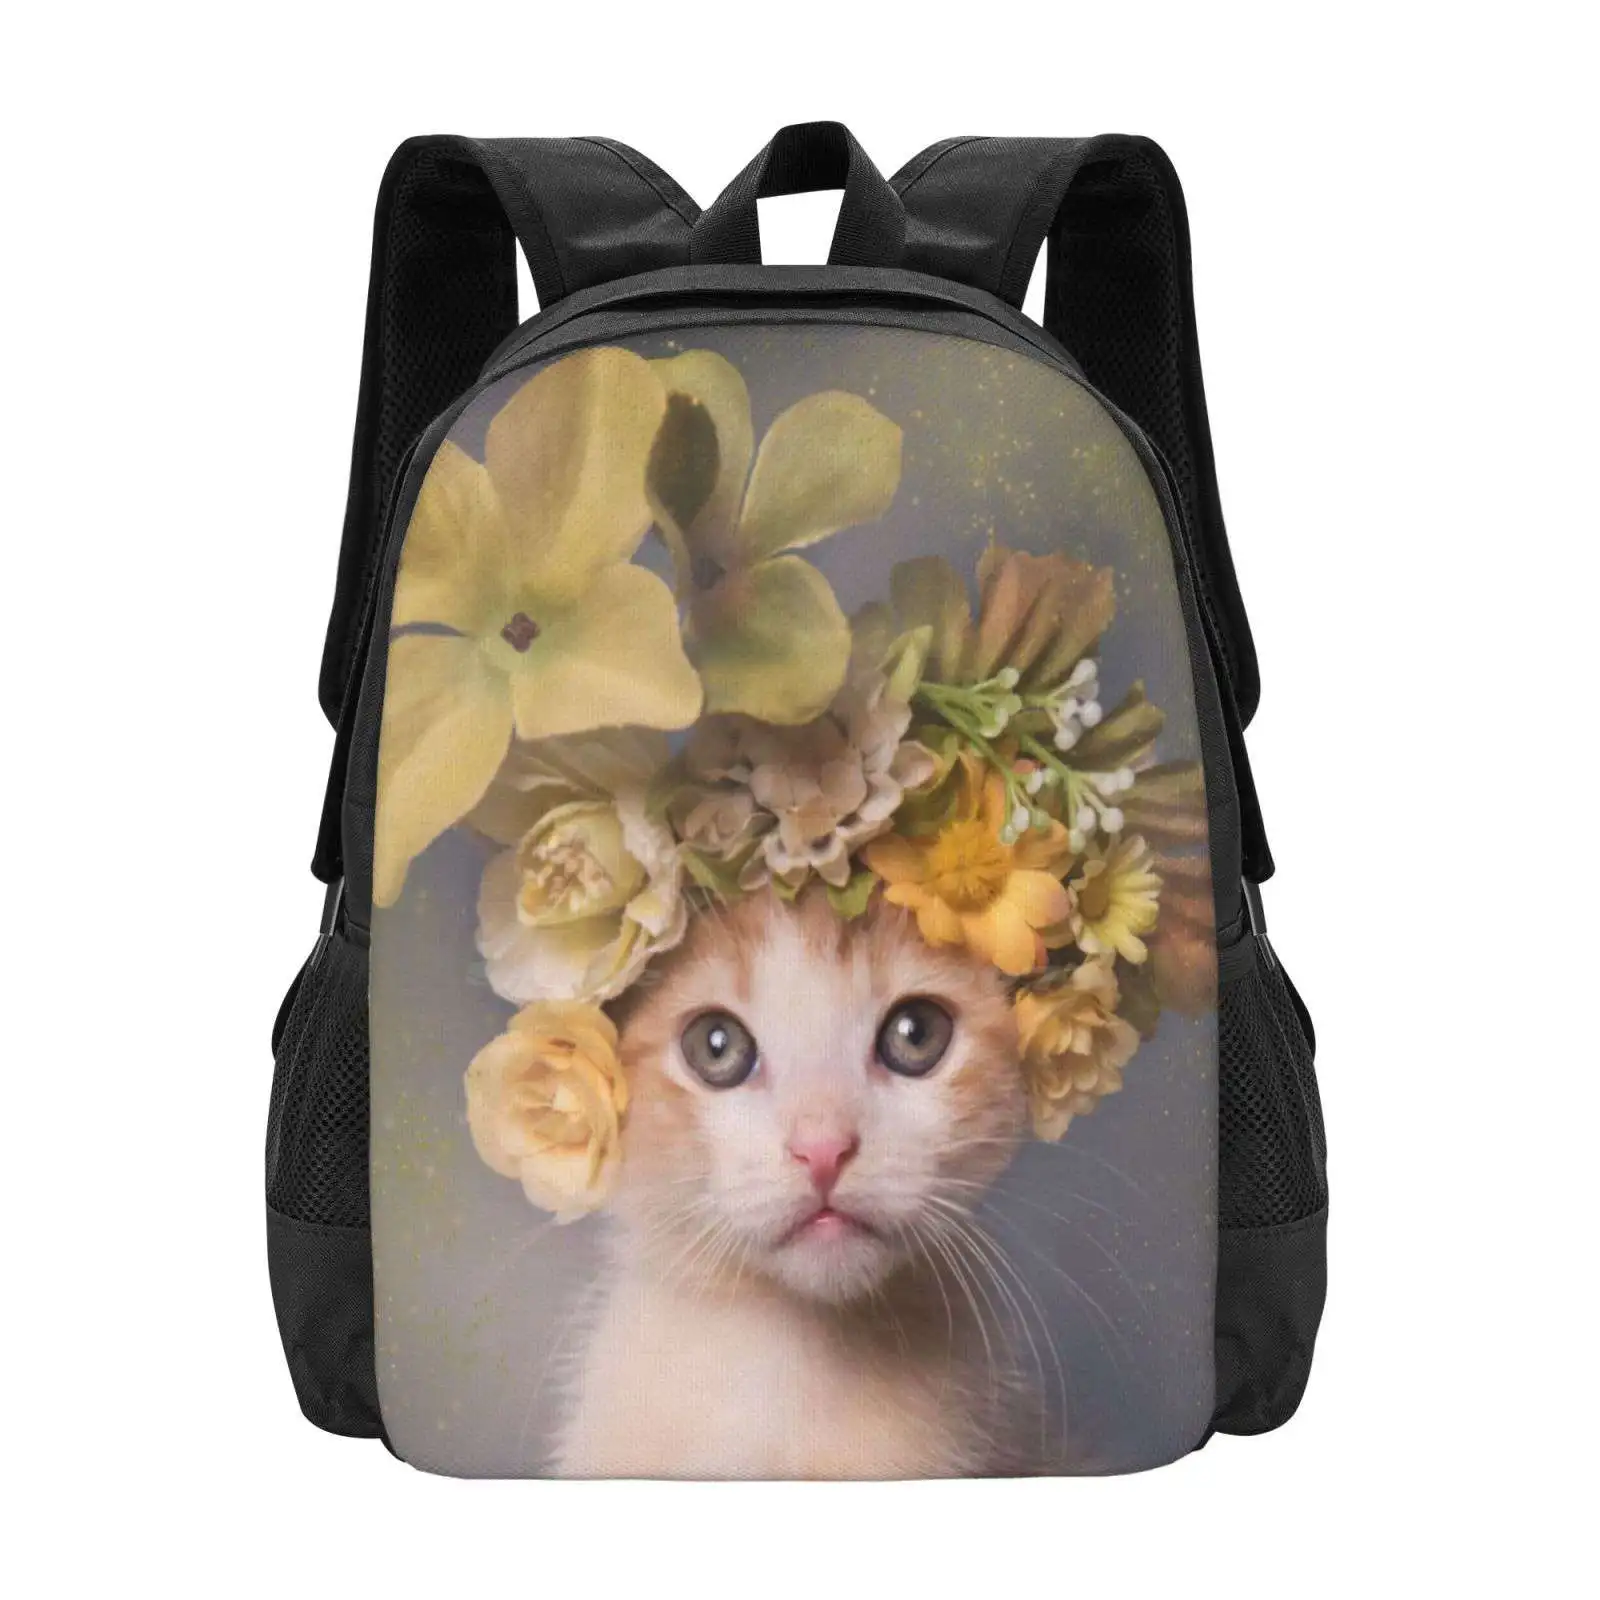 

Flower Power , Bull The Kitten Hot Sale Backpack Fashion Bags Flowers Flower Power Gamand Adorable Flower Crown Yellow Tabby